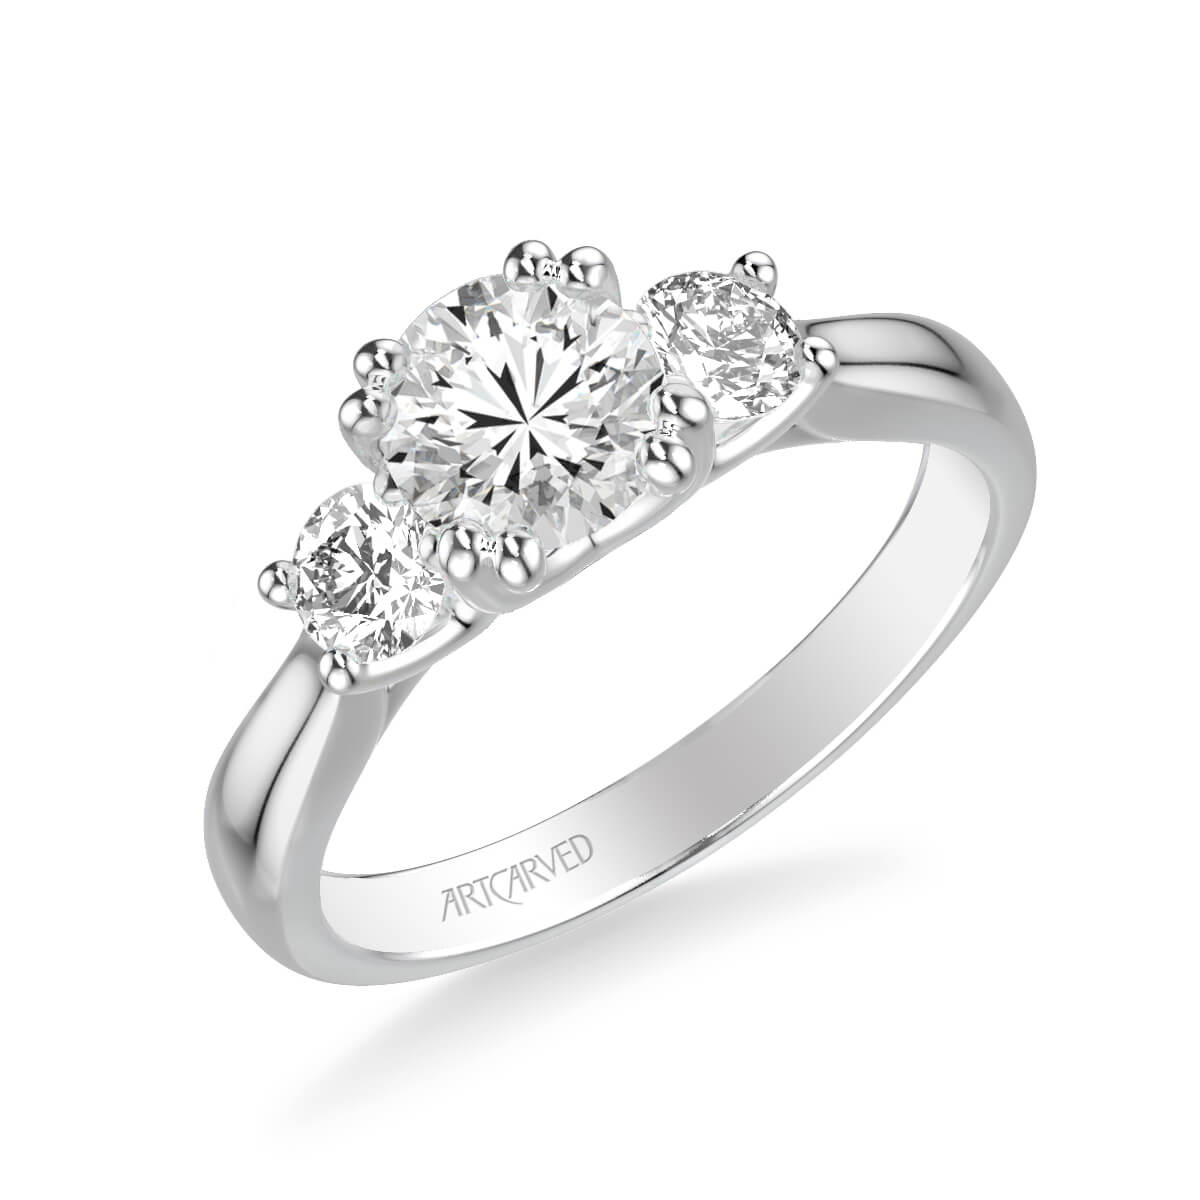 6 carat Radiant Cut Pave Diamond Engagement Ring | Miss Diamond Ring